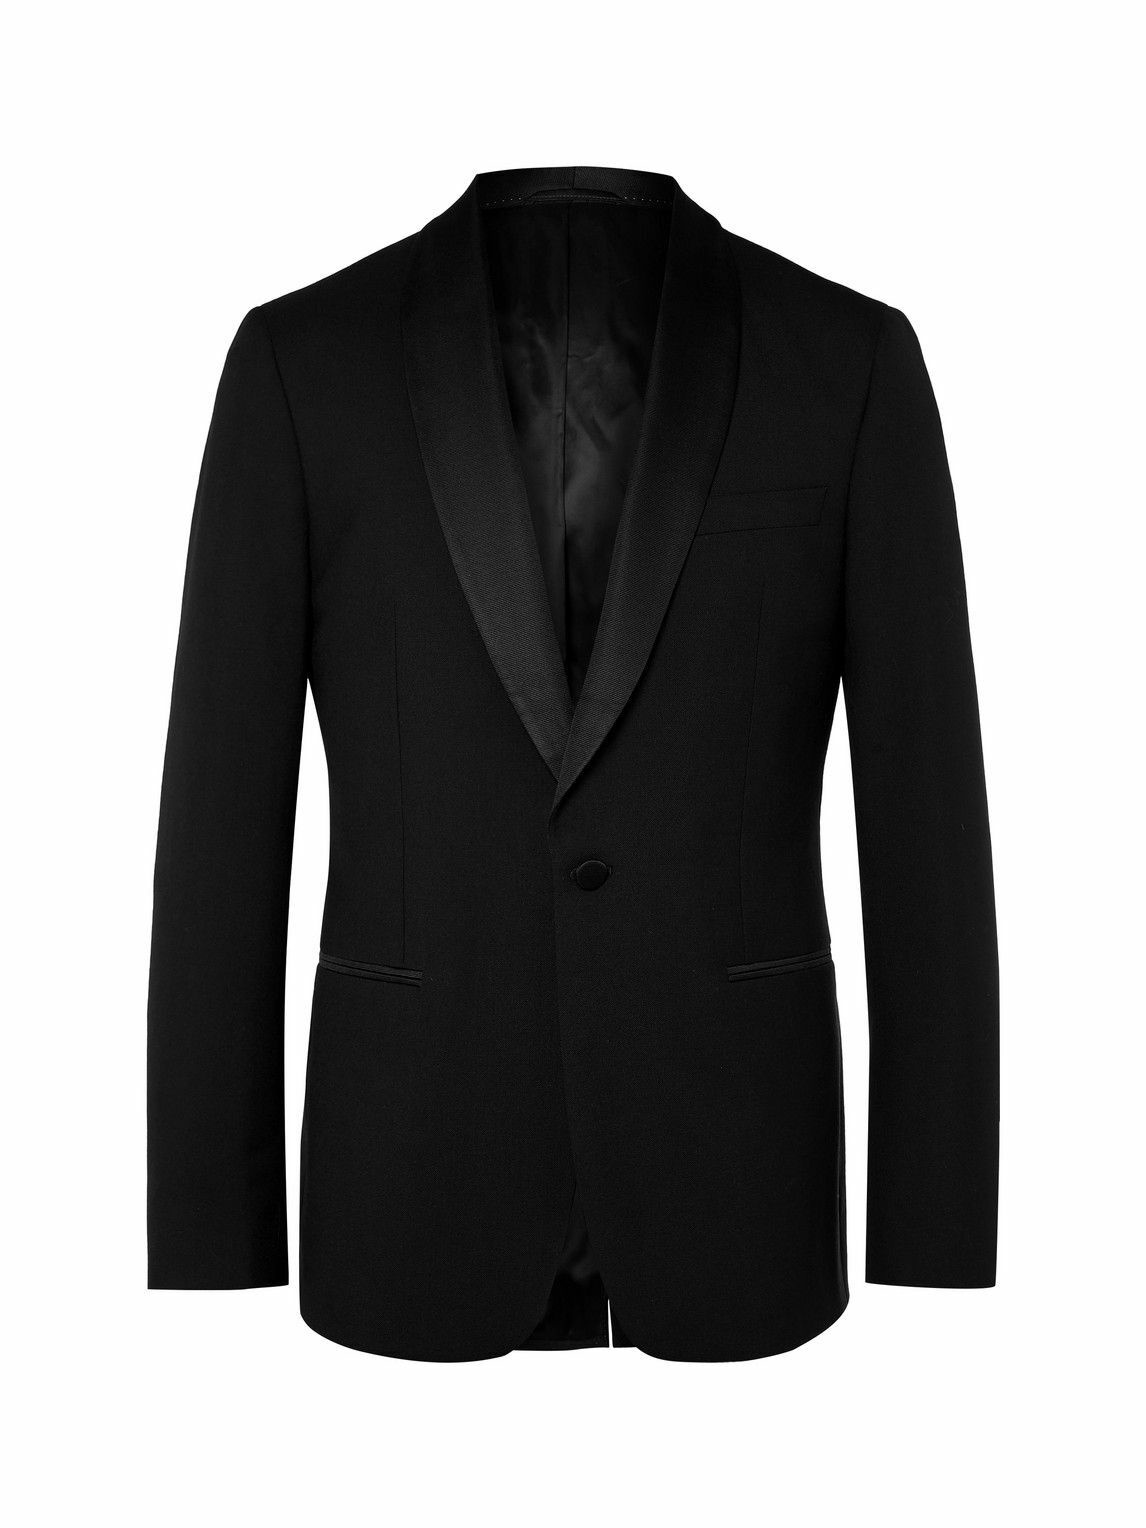 Mr P. - Black Slim-Fit Shawl-Collar Faille-Trimmed Virgin Wool Tuxedo ...